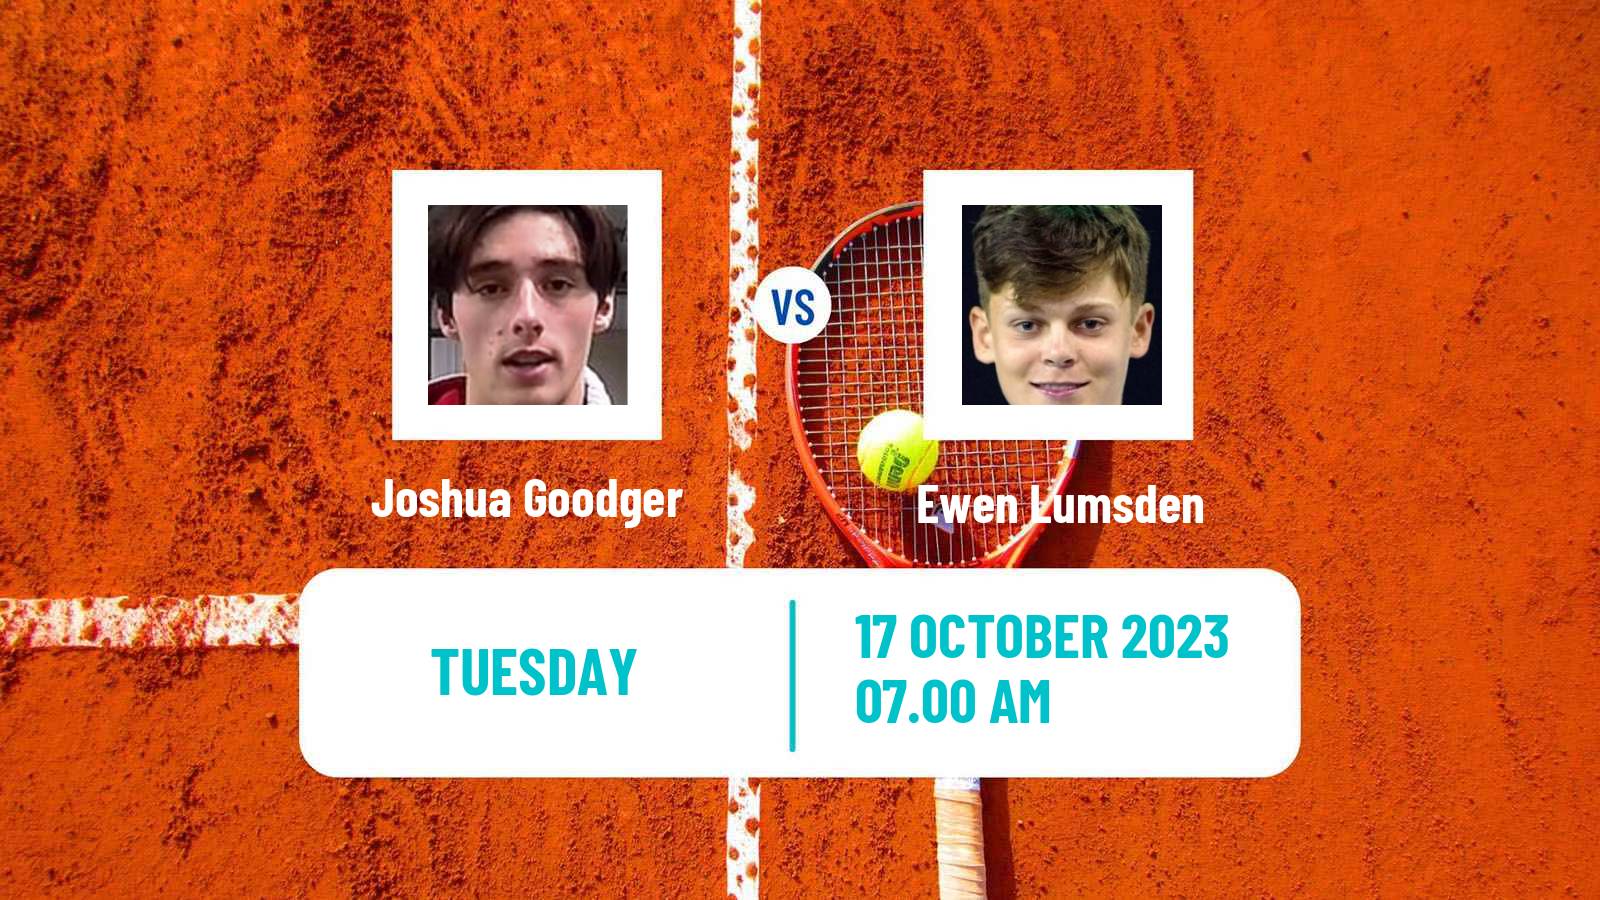 Tennis ITF M25 Edgbaston Men Joshua Goodger - Ewen Lumsden